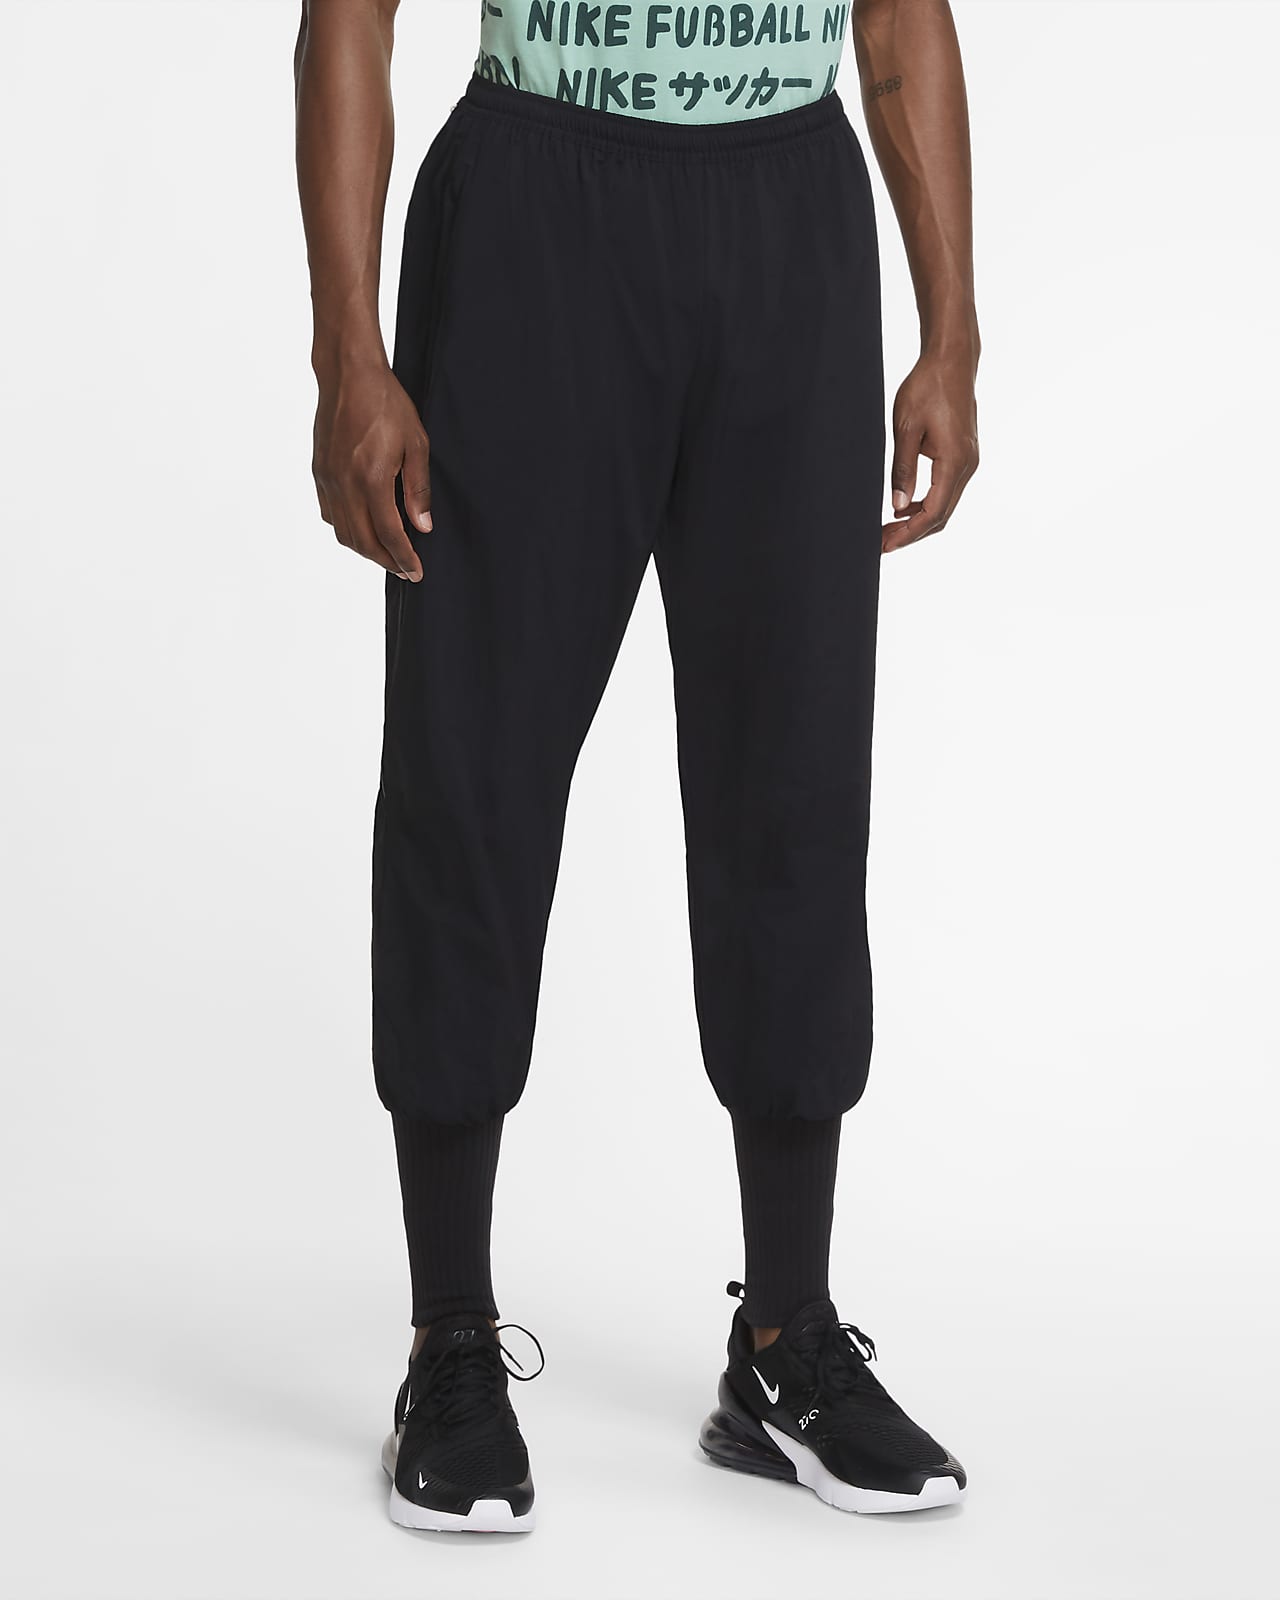 Nike F.C. Men's Woven Soccer Pants 